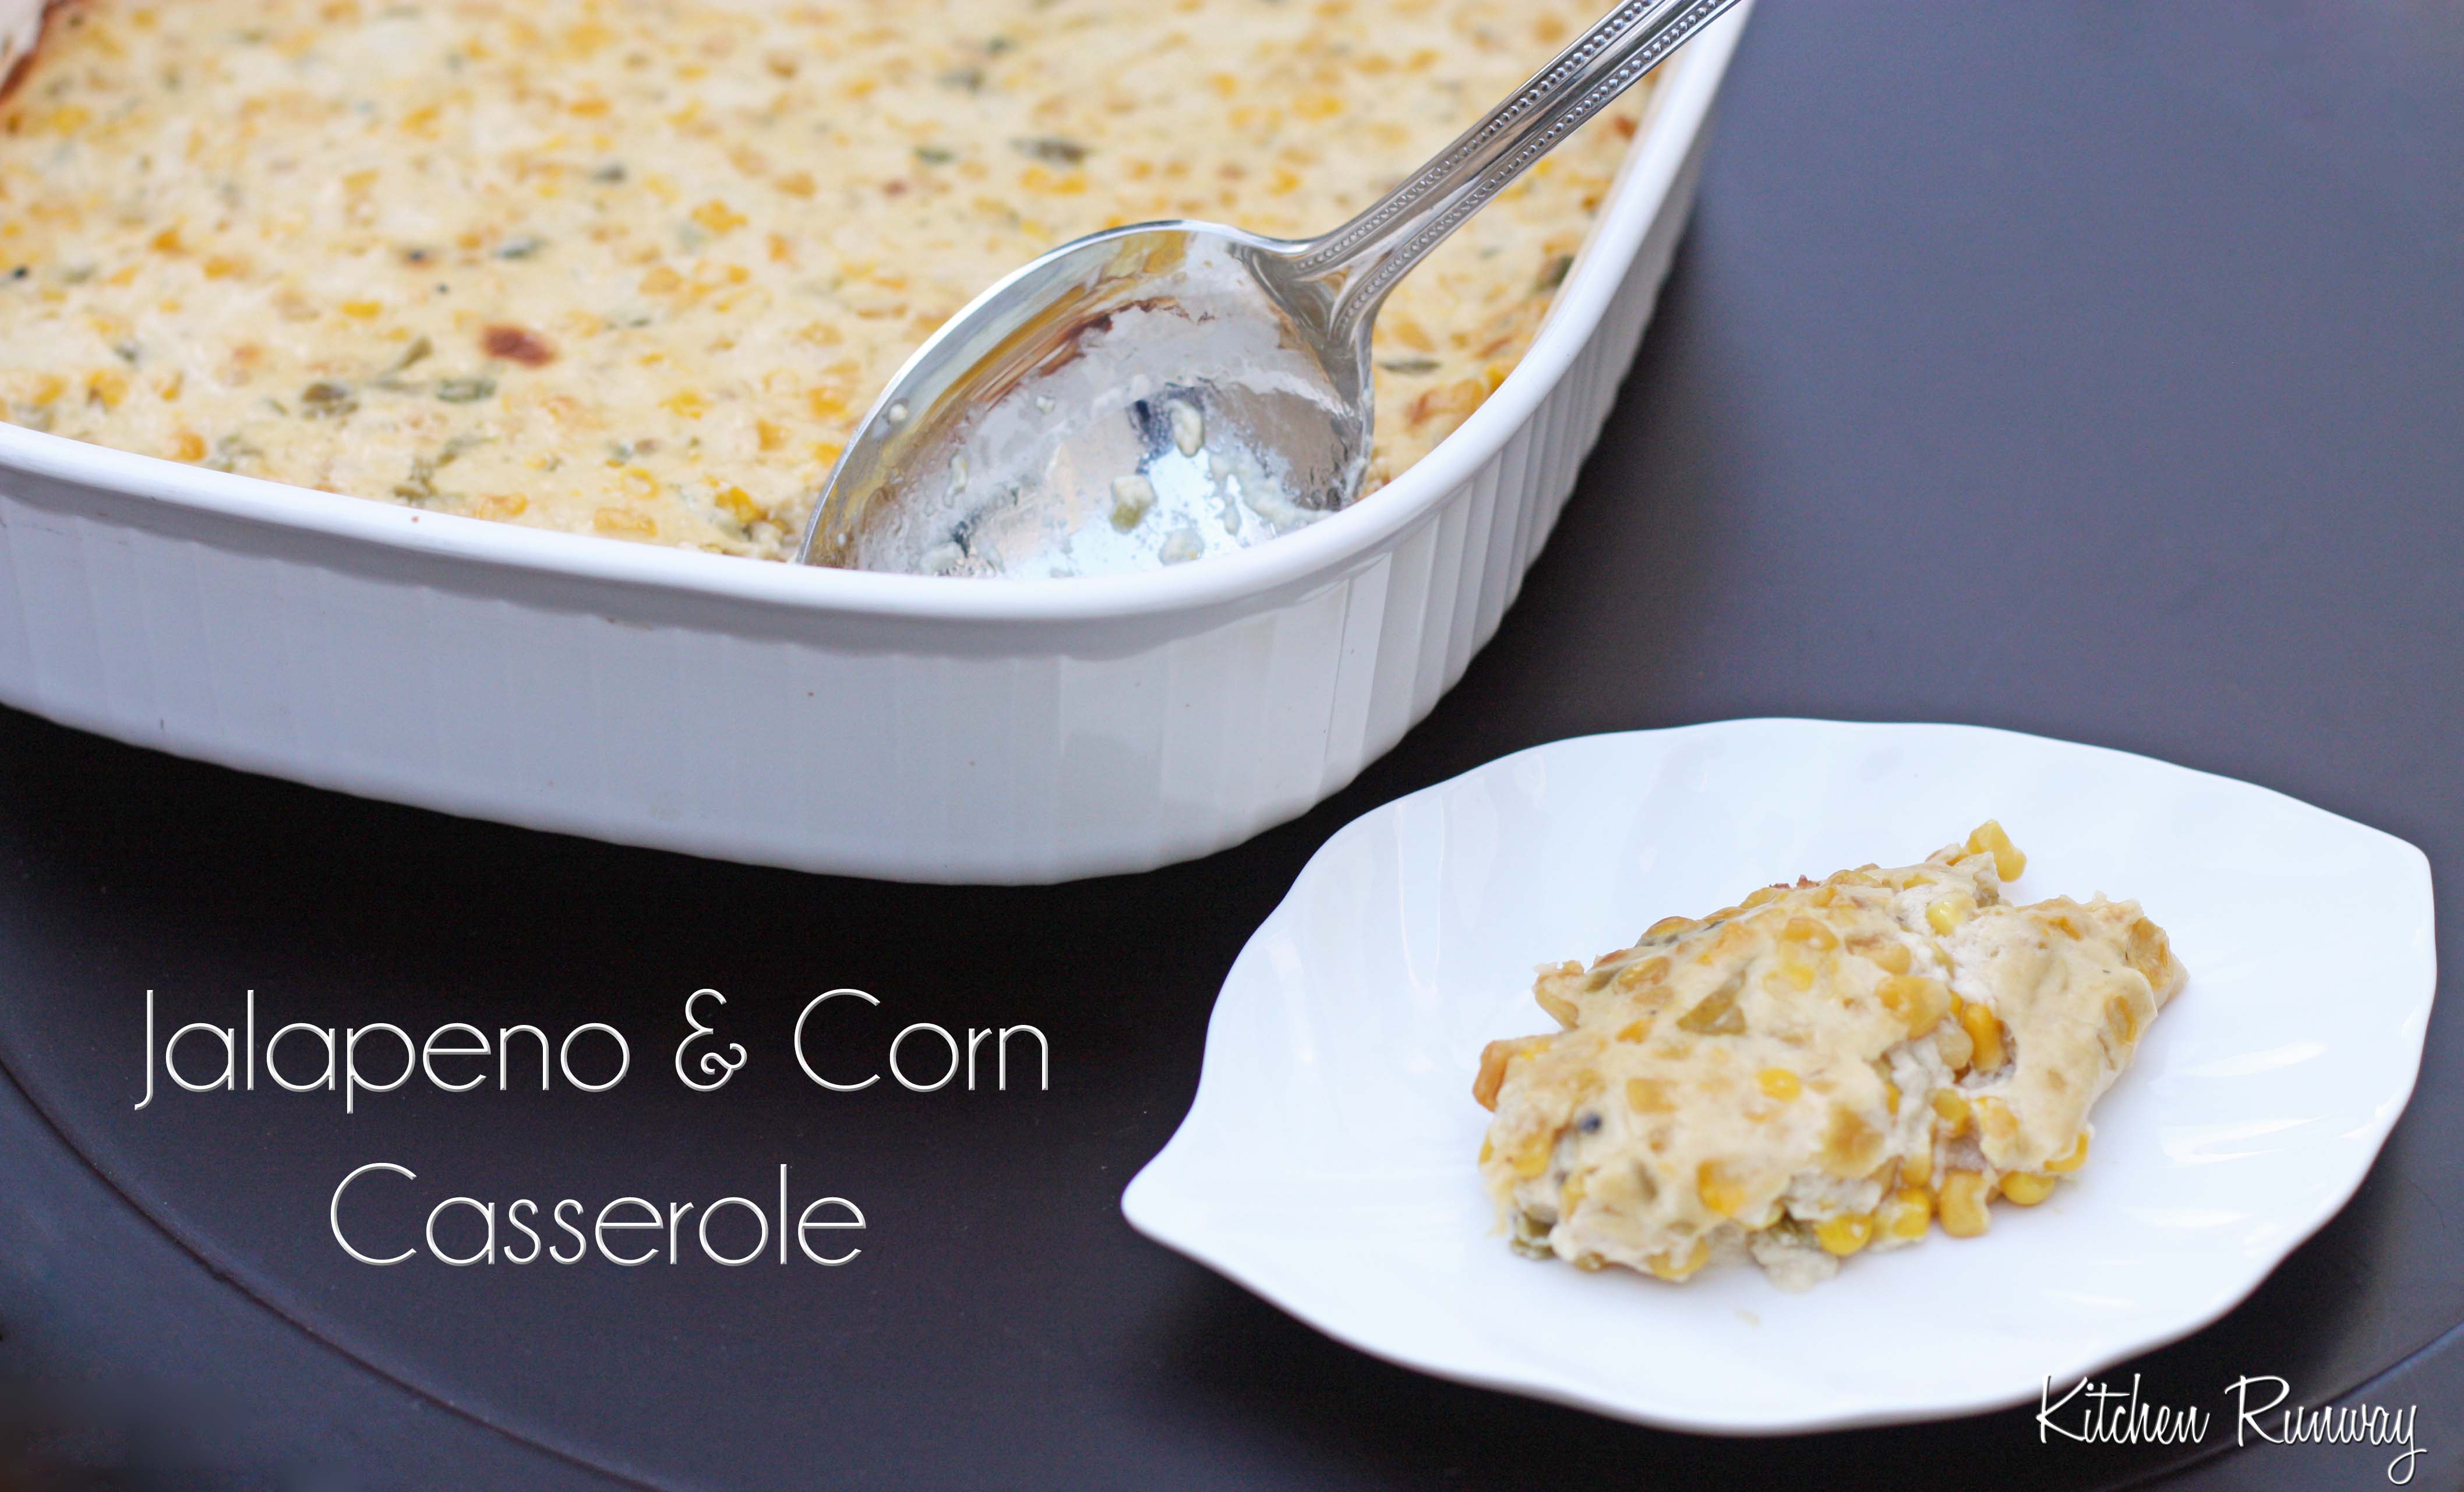 jalapeno and corn casserole